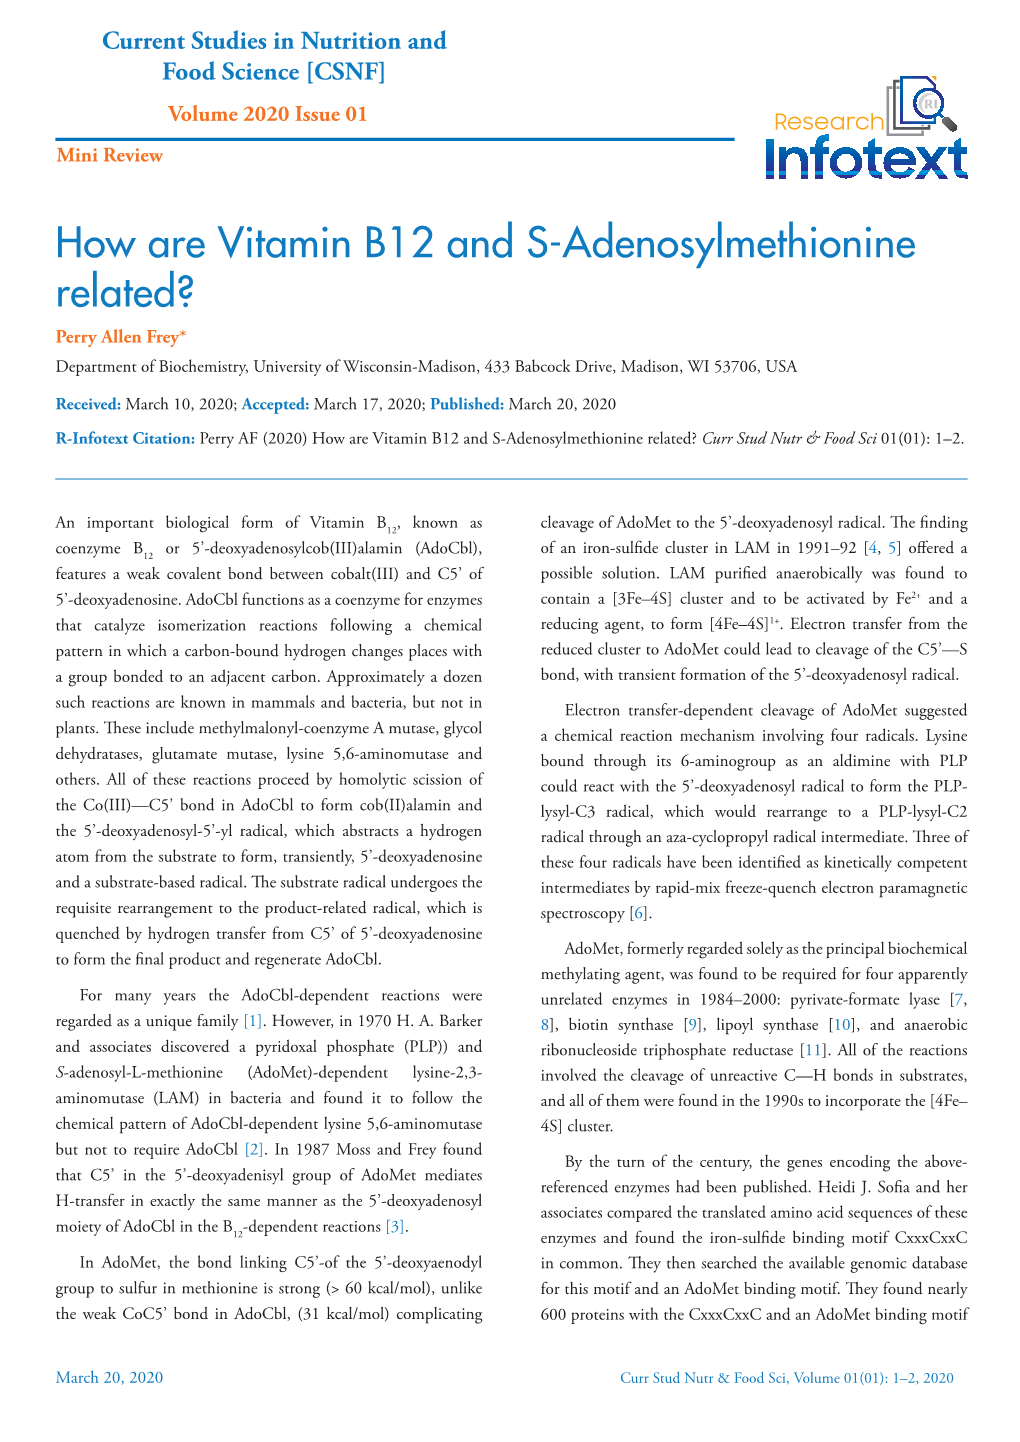 How Are Vitamin B12 and S-Adenosylmethionine